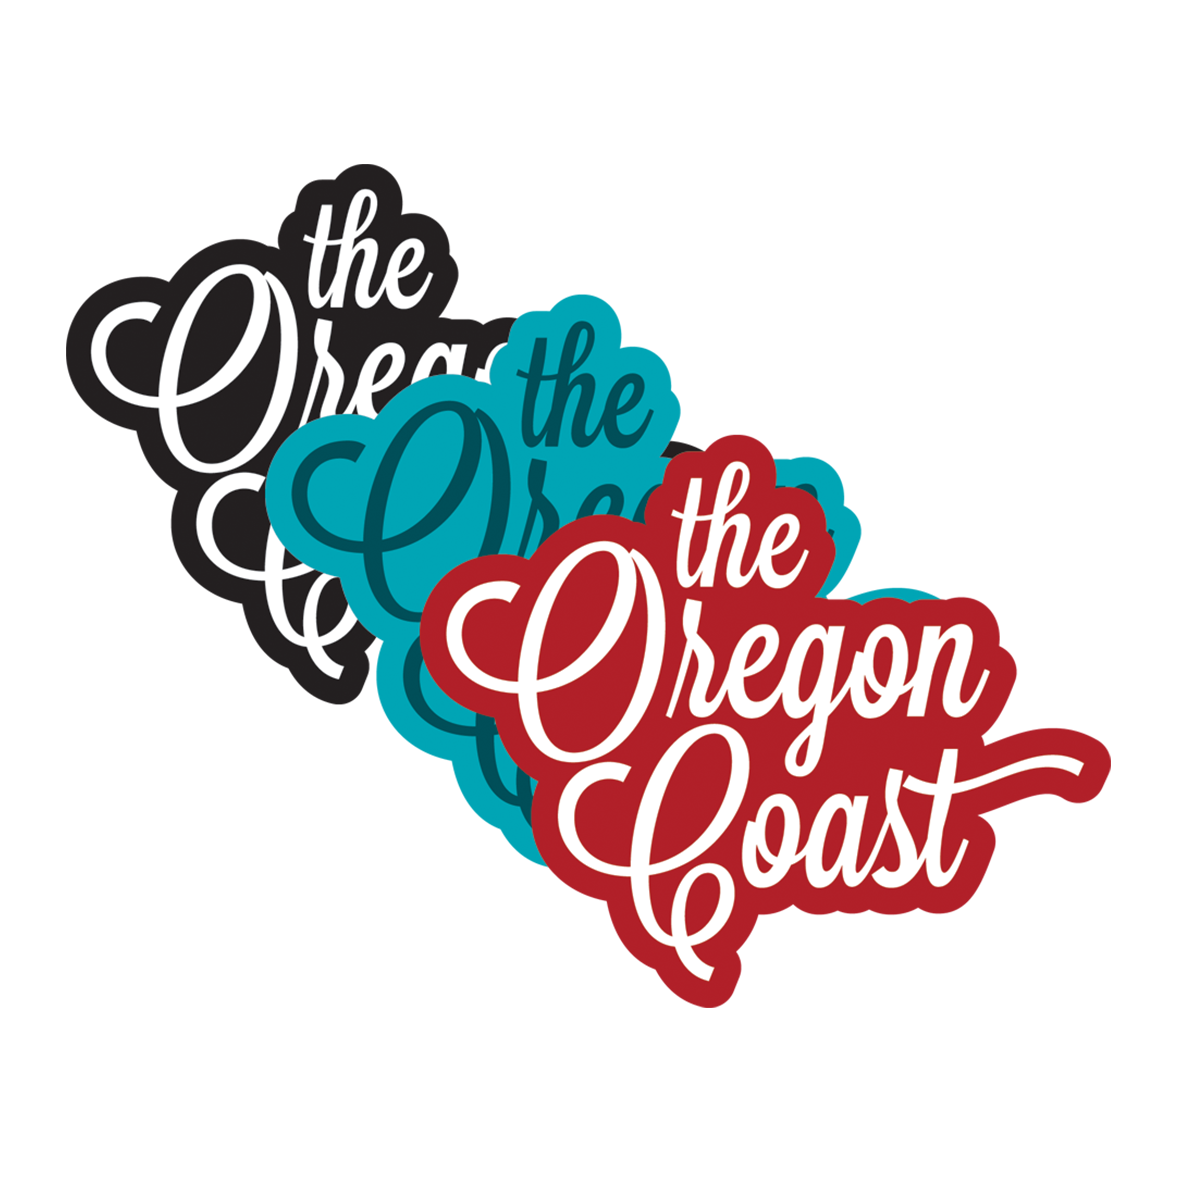 The Oregon Coast - Script Sticker 3-Pack